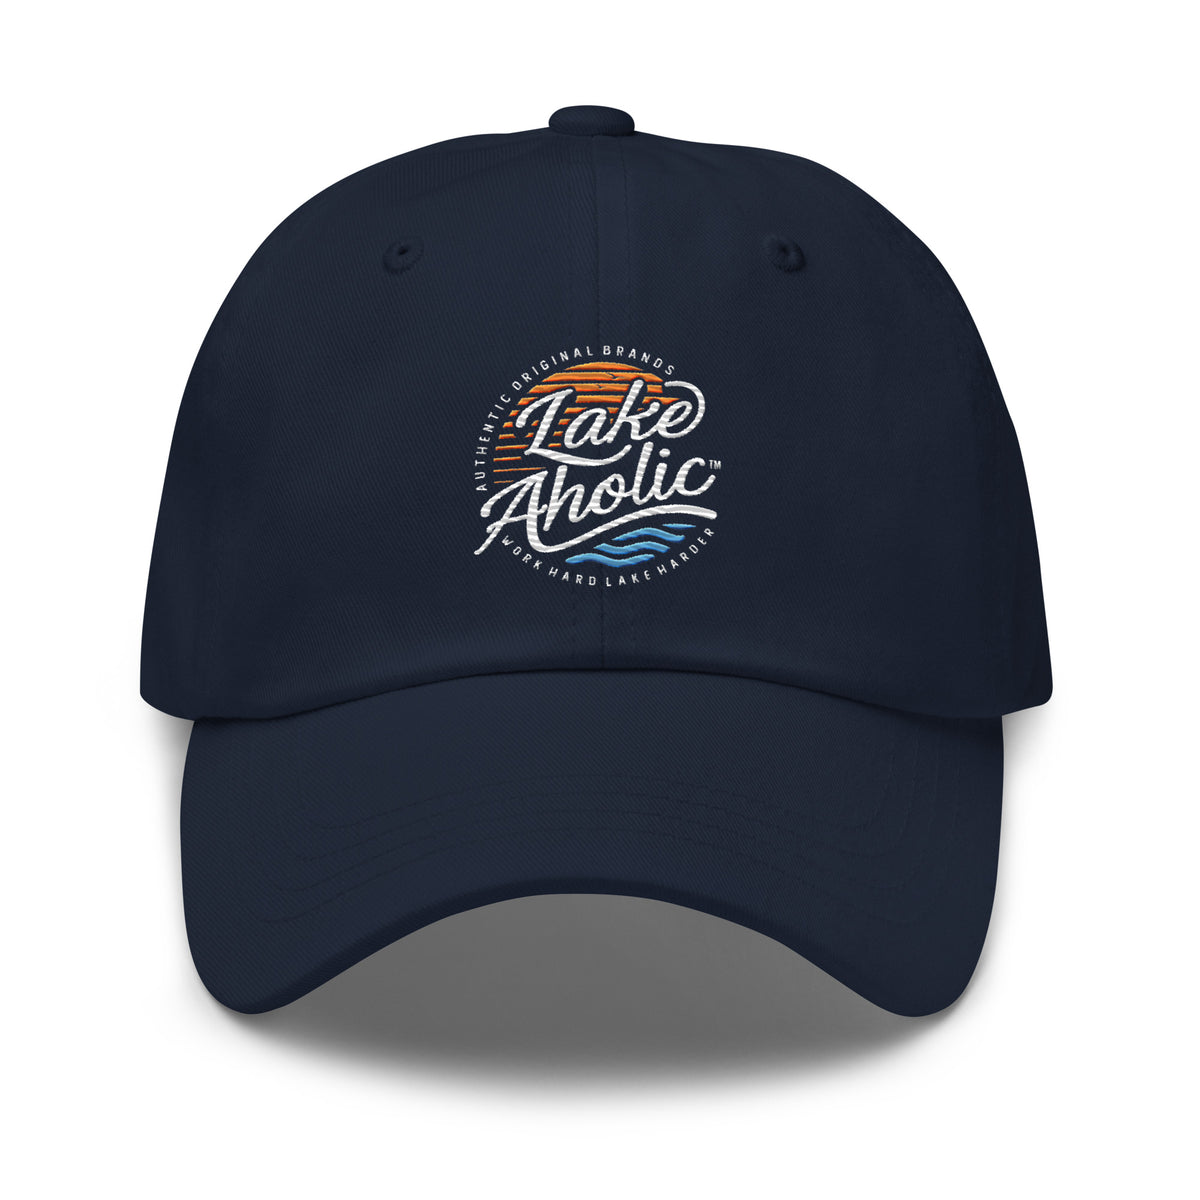 Lake Aholic Baseball Hat